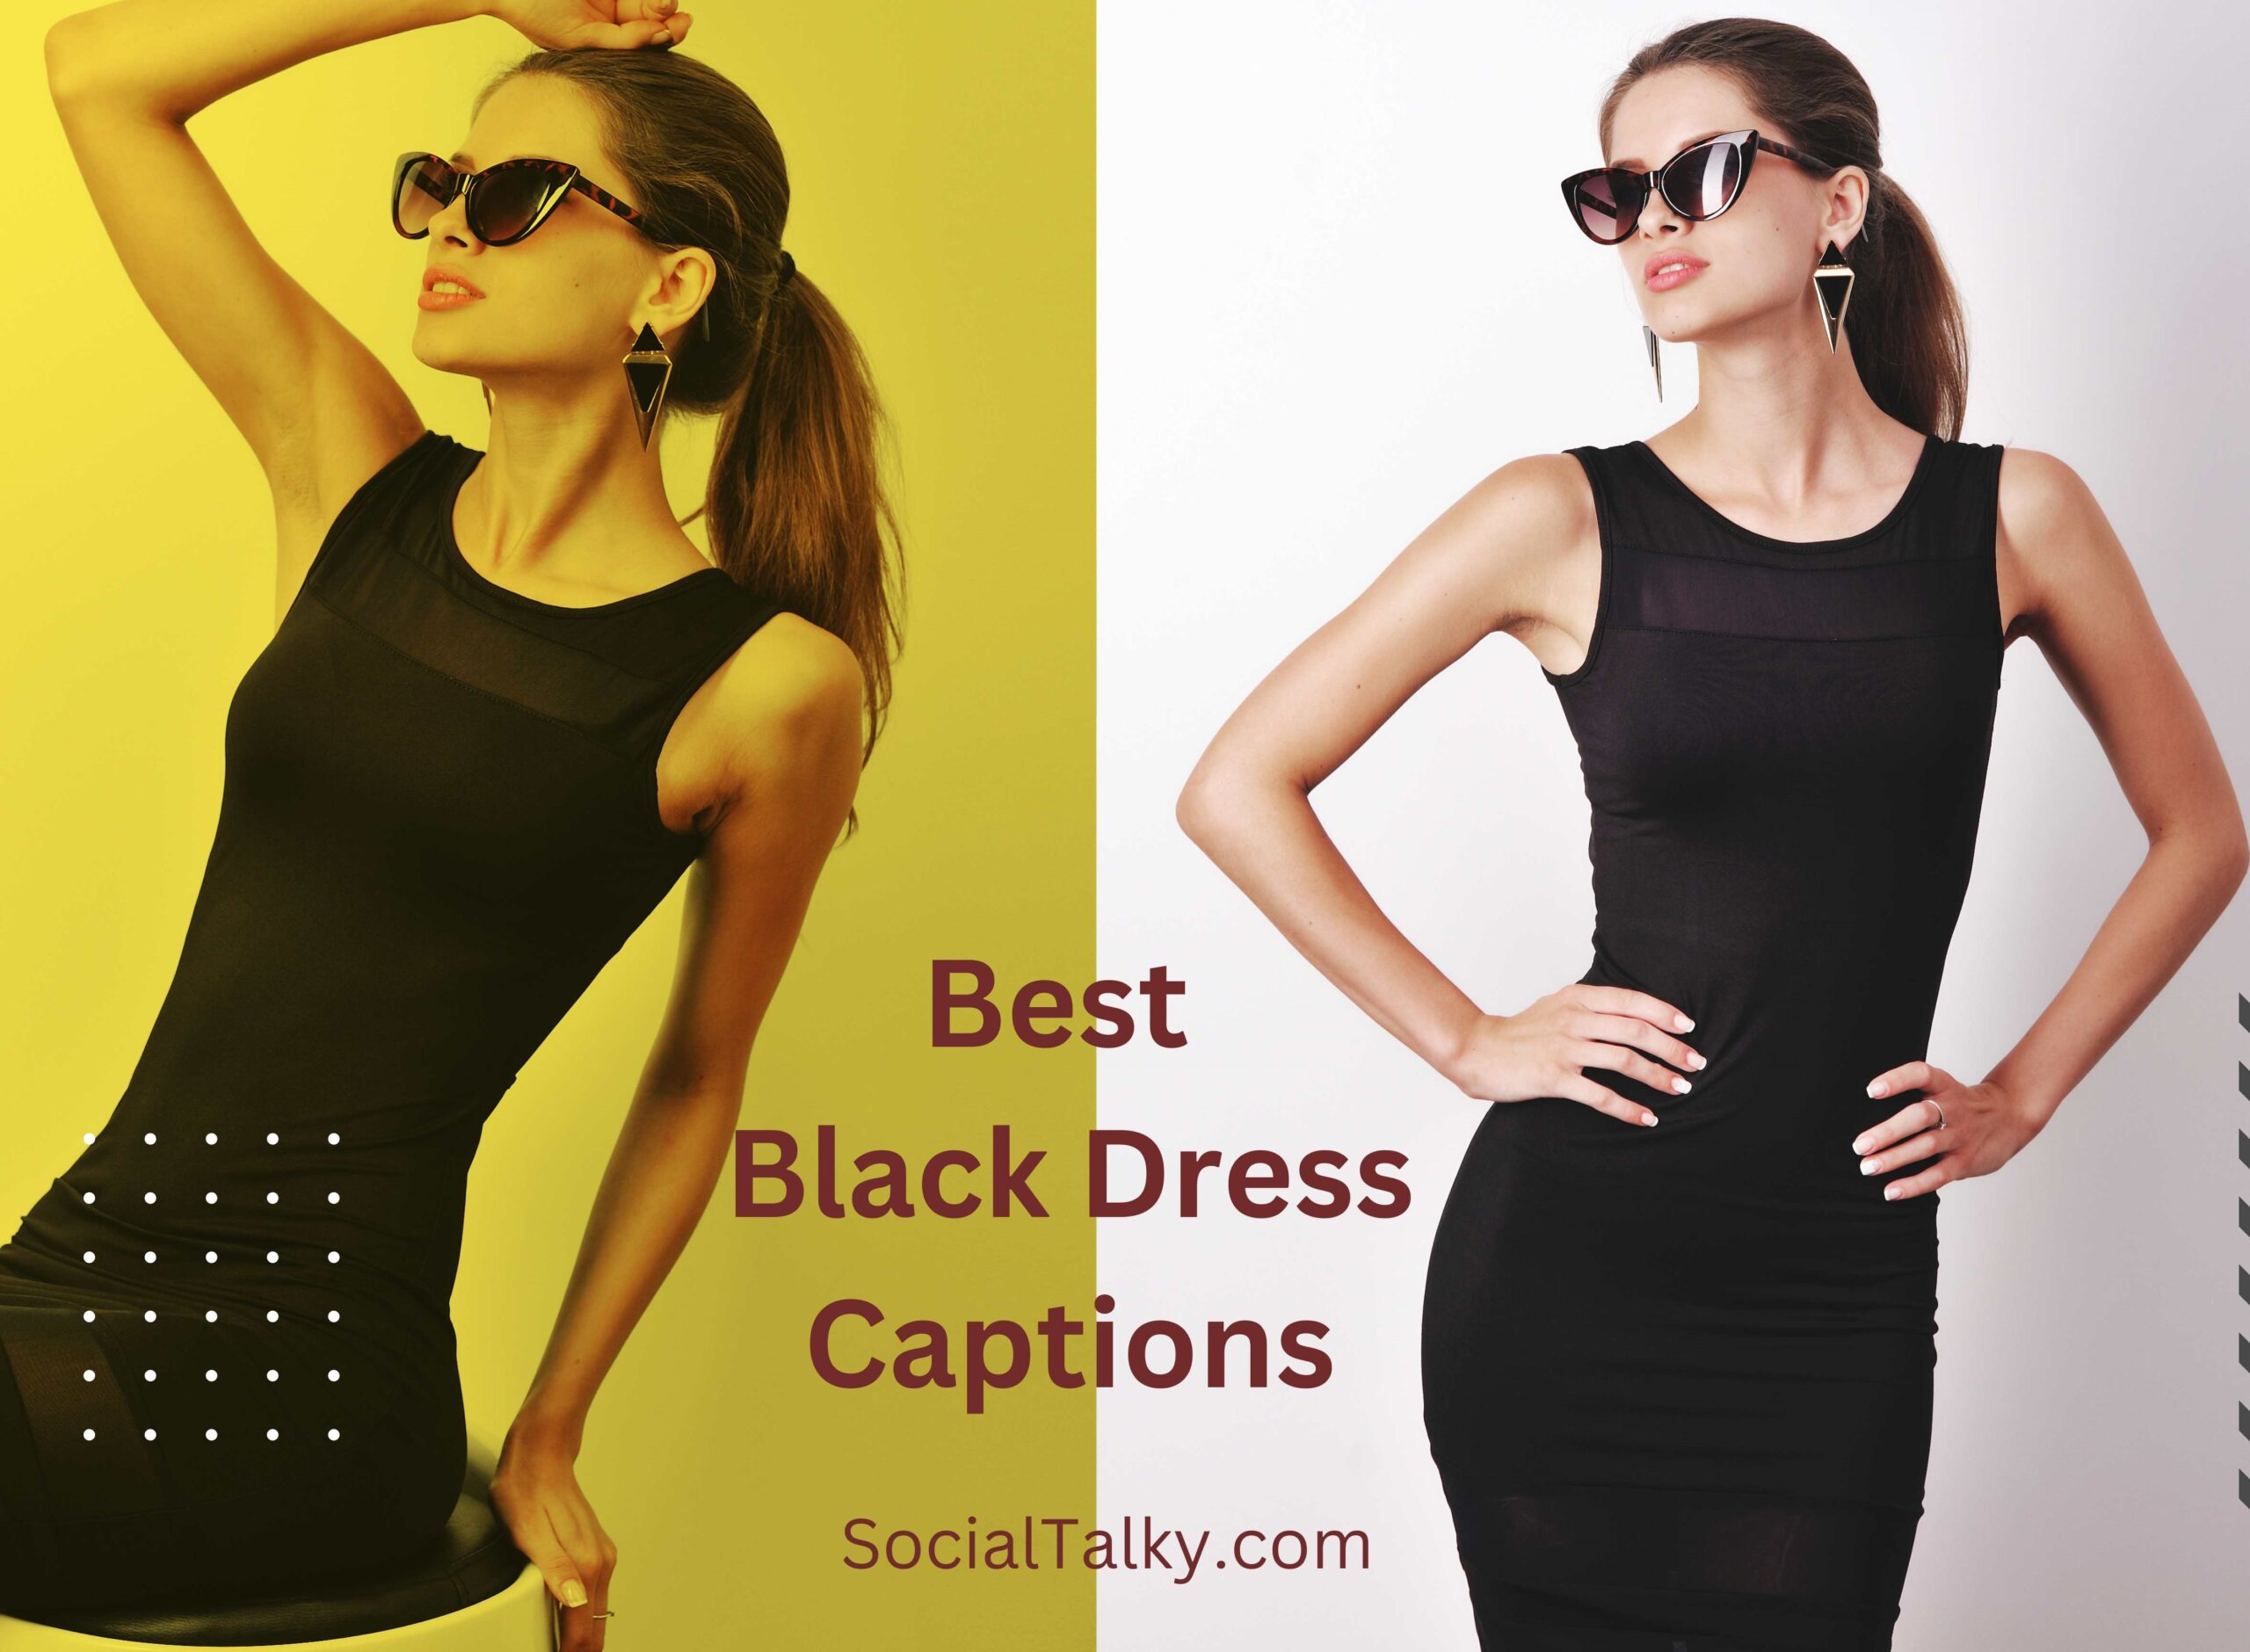 Best Black Dress Captions for Instagram and Pinterest